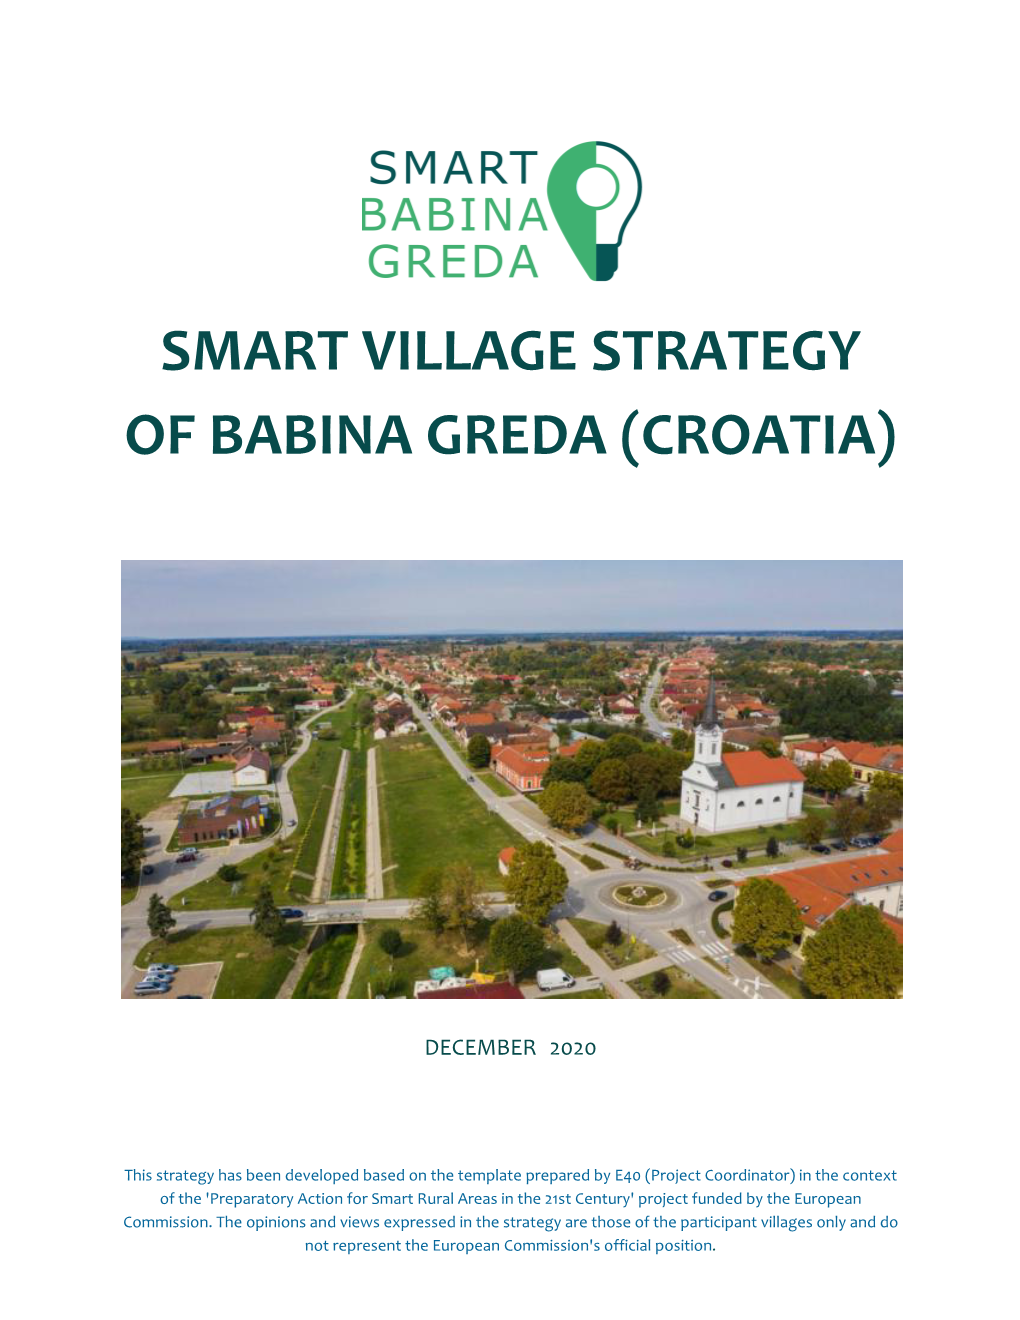 Smart Village Strategy of Babina Greda (Croatia)